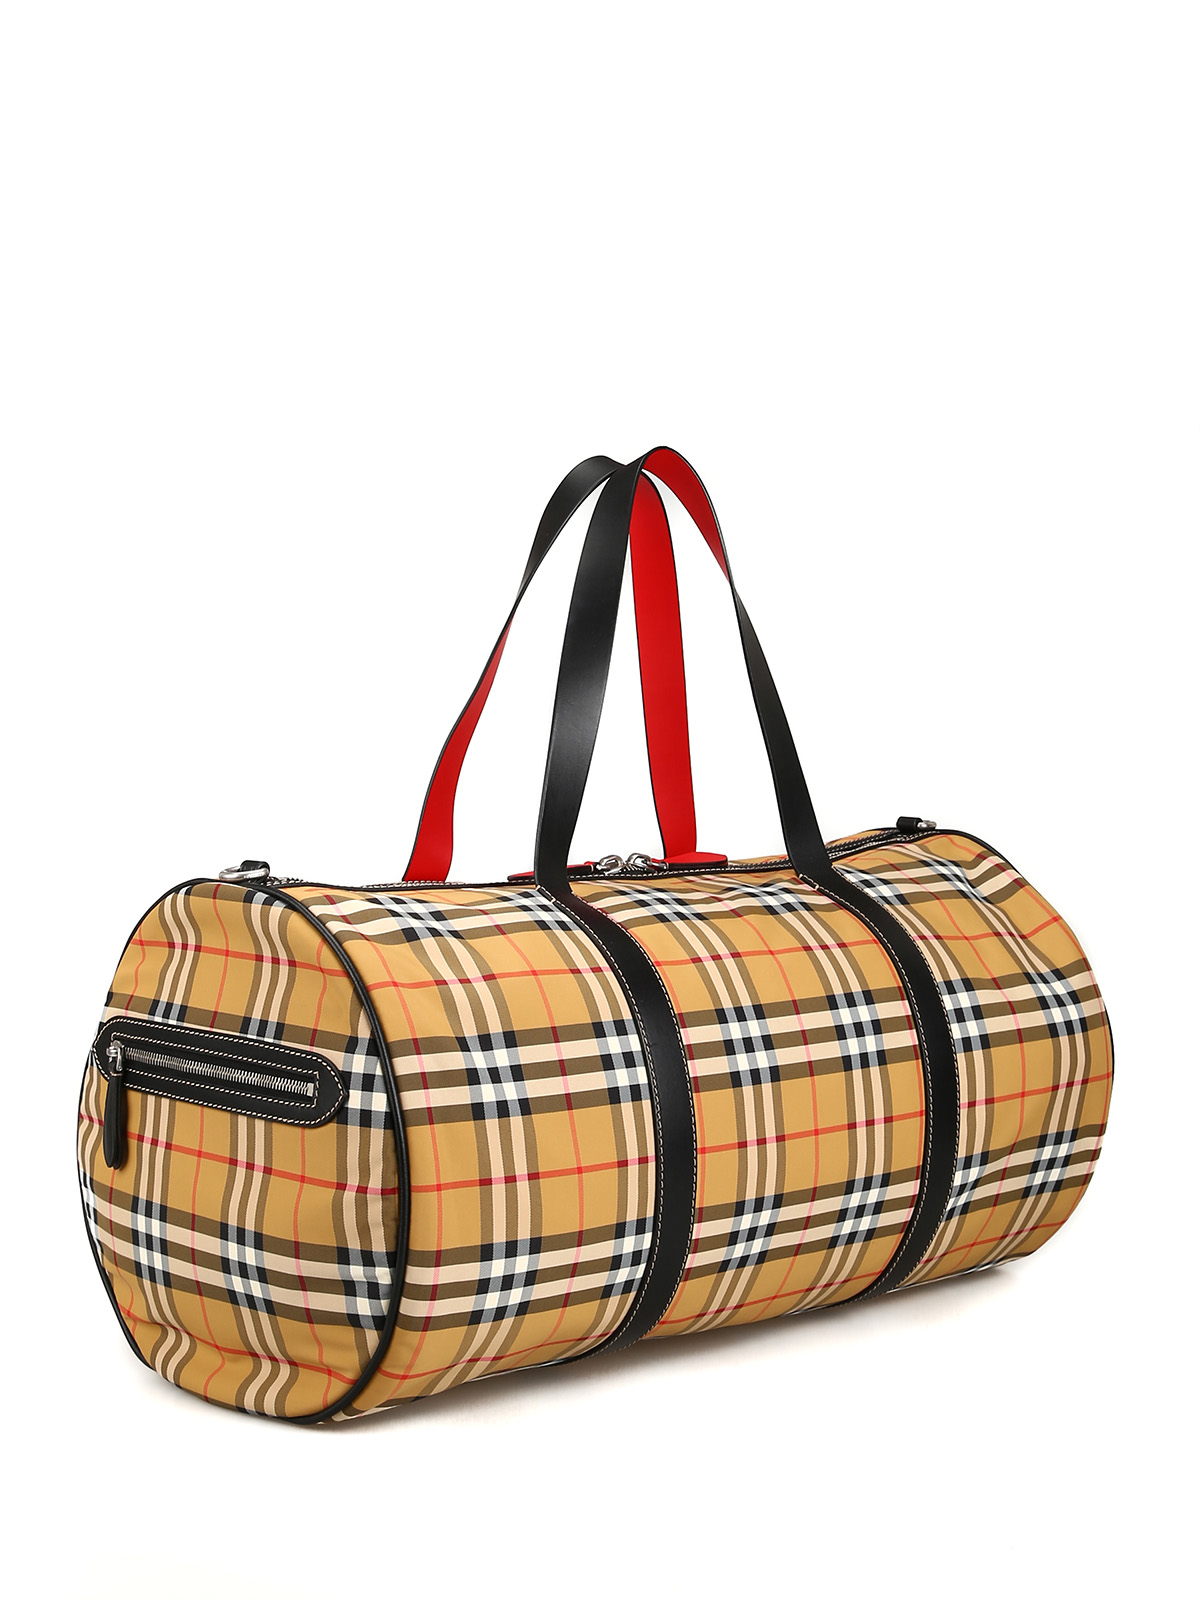 Burberry - Kennedy L Vintage Check travel duffel bag - Luggage & Travel bags - 8005523